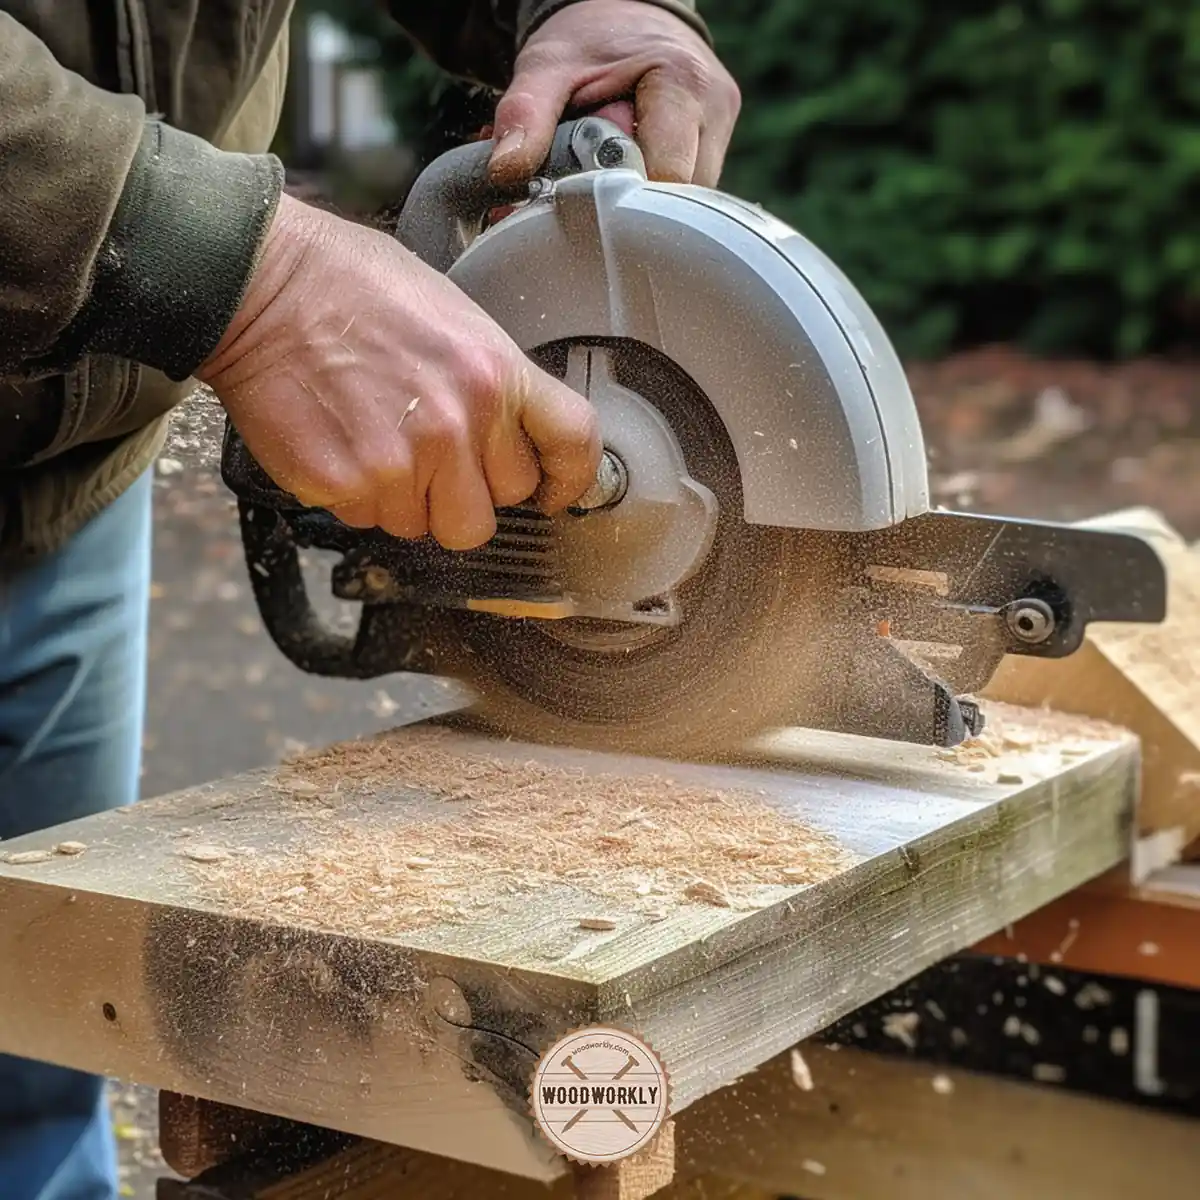 Cutting wood with a circular saw